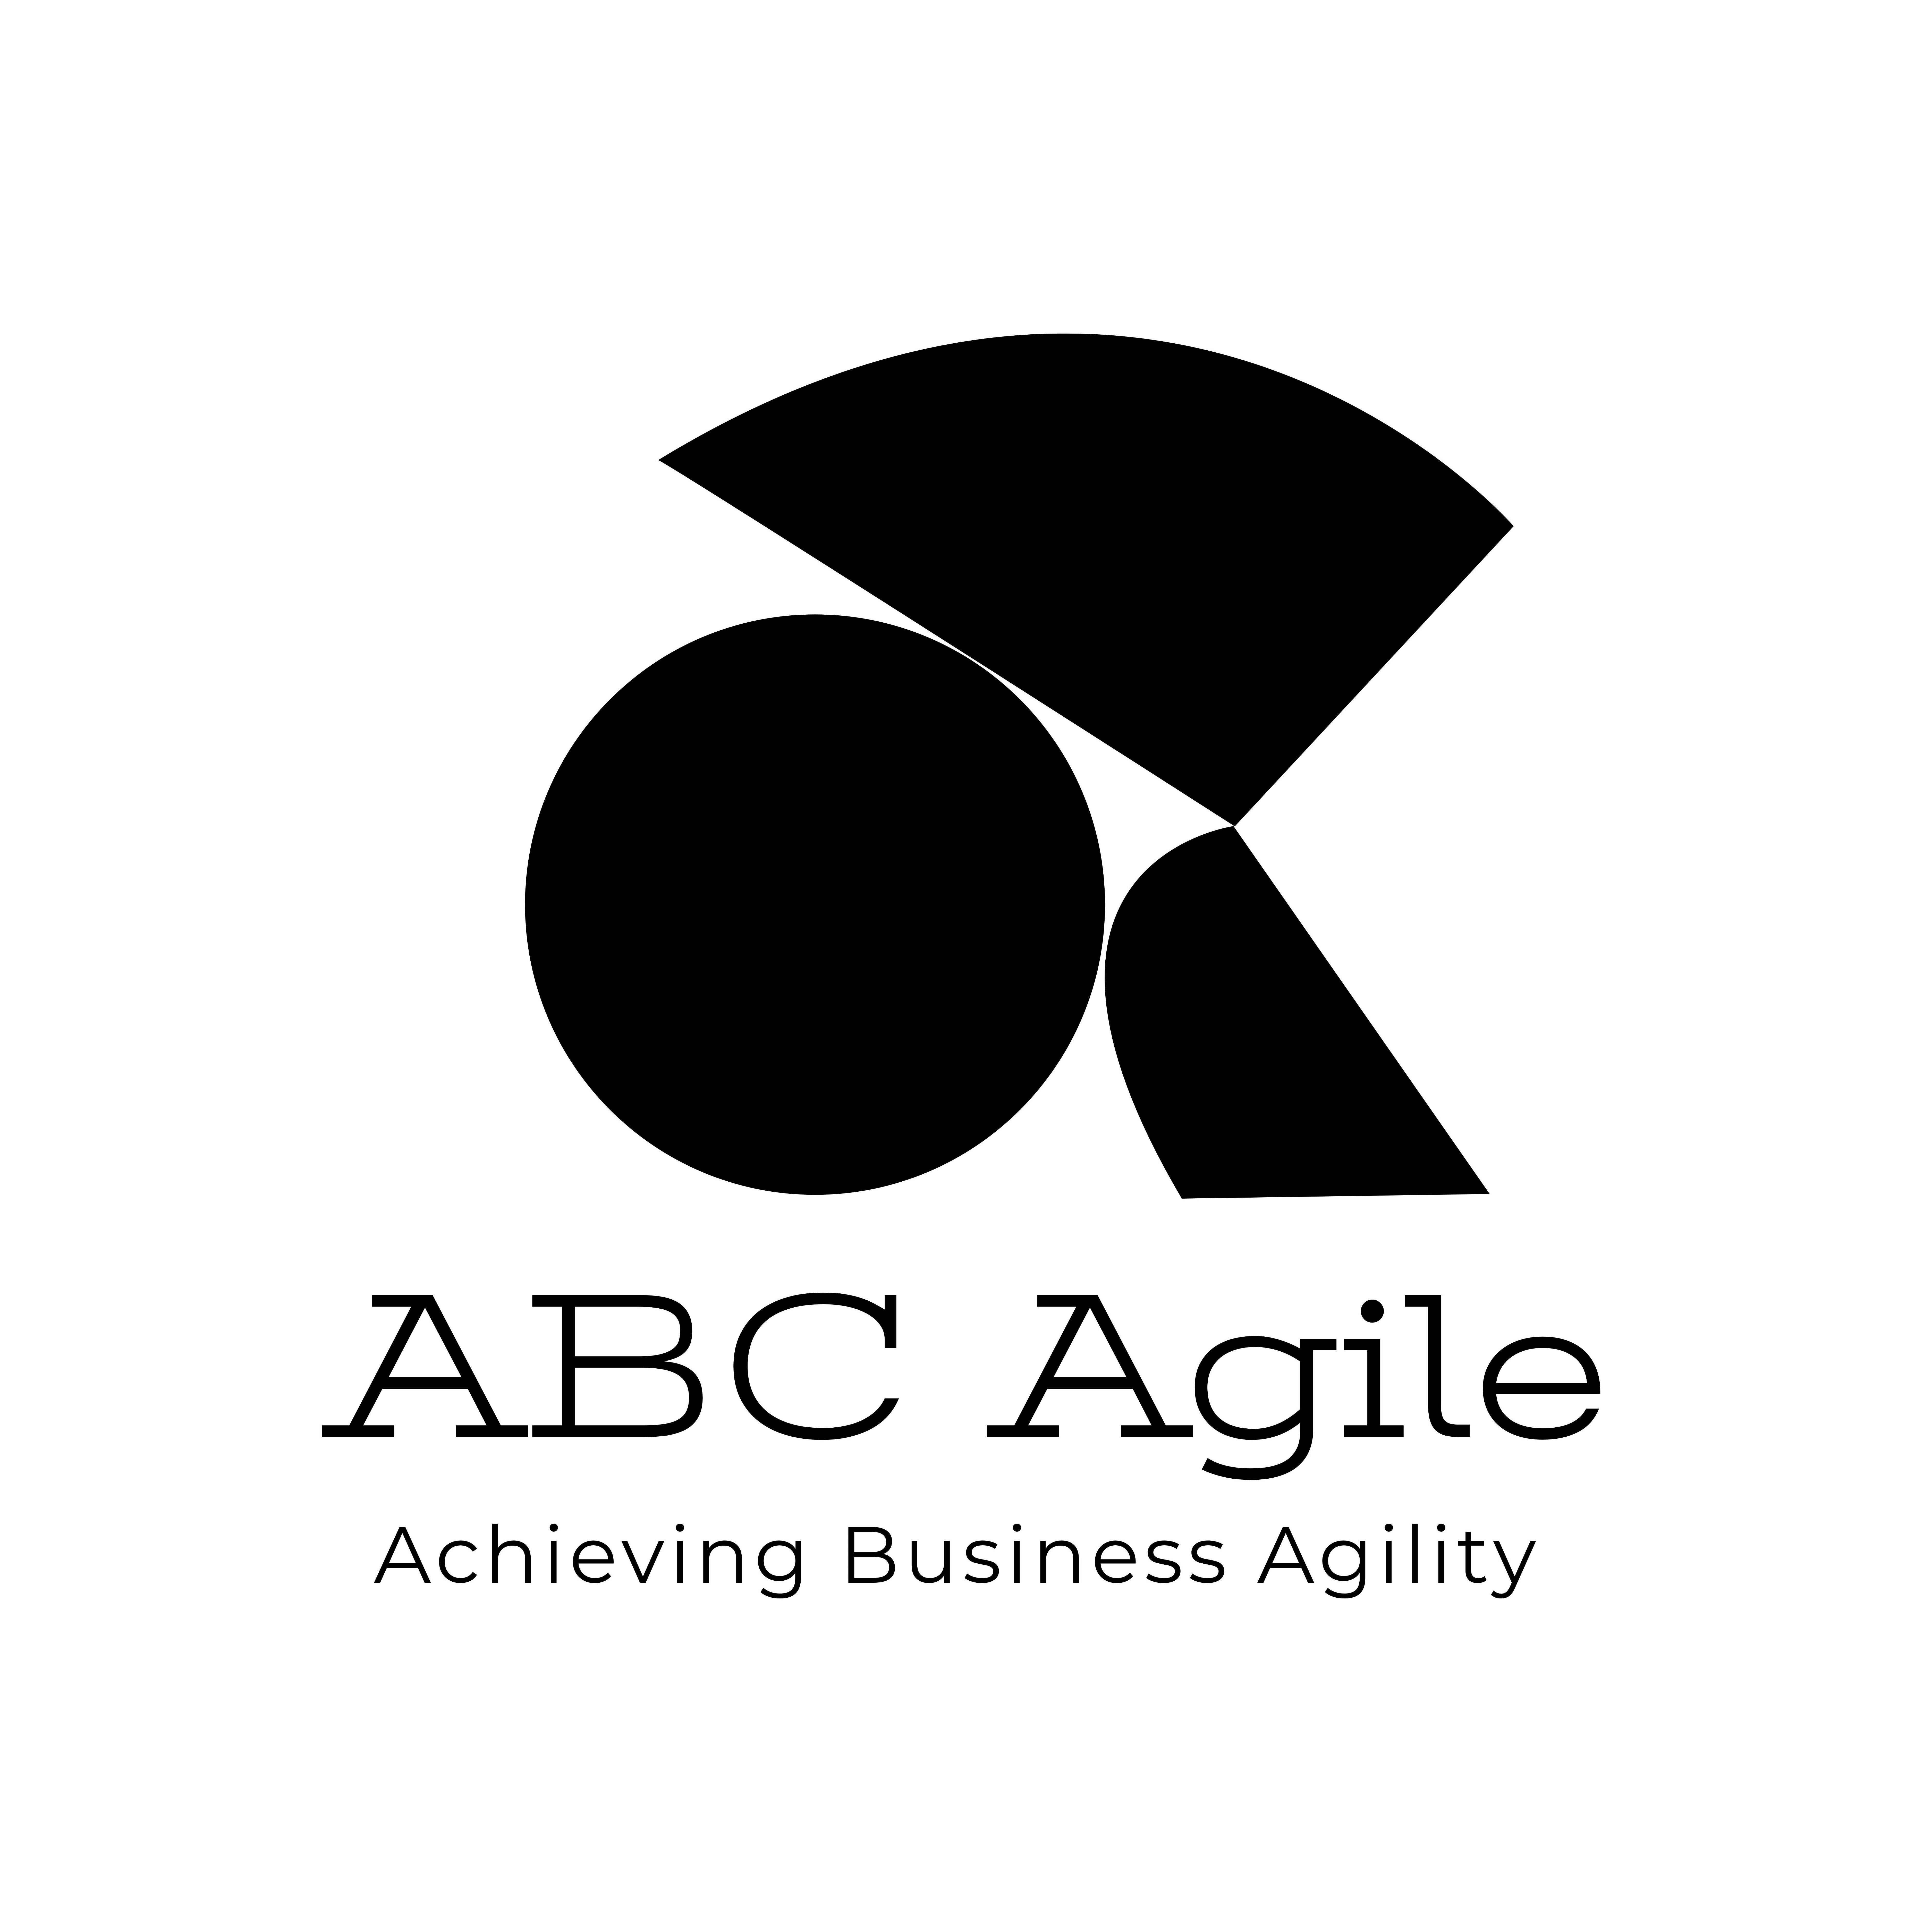  ABC AGILE ACHIEVING BUSINESS AGILITY